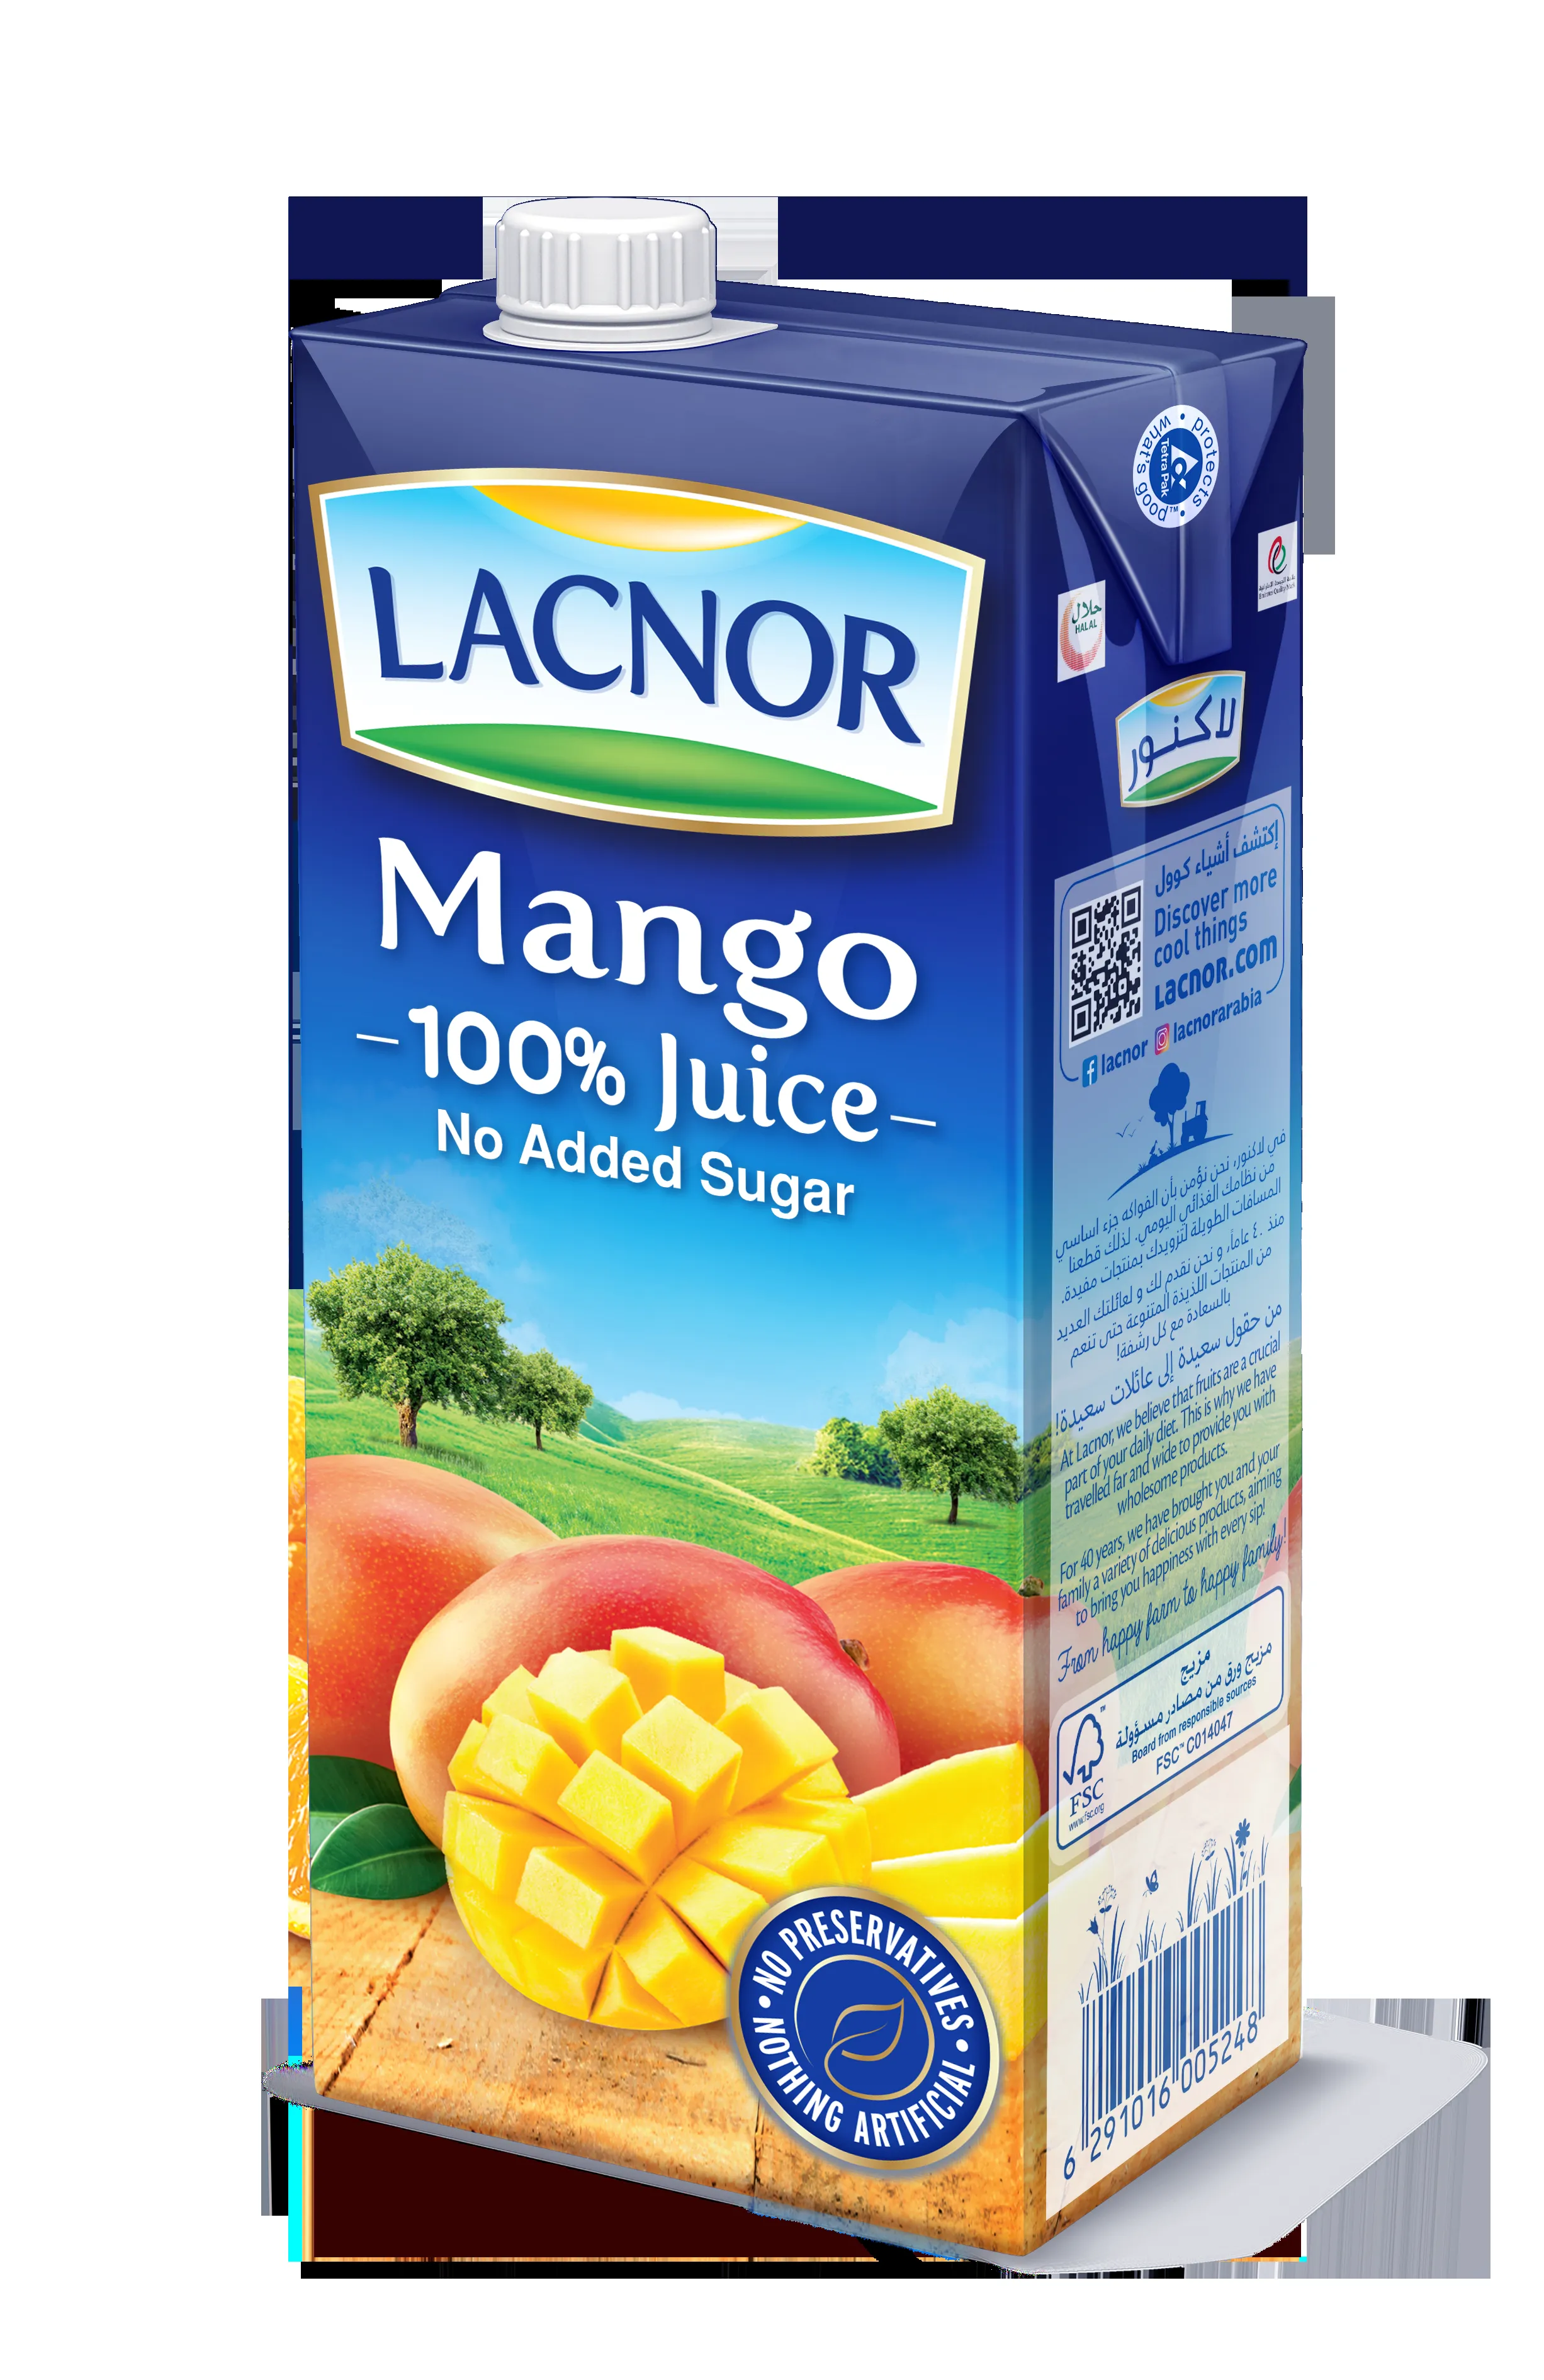 Lacnor Sugar Free Mango Mango Juice 12 x 1 Liter